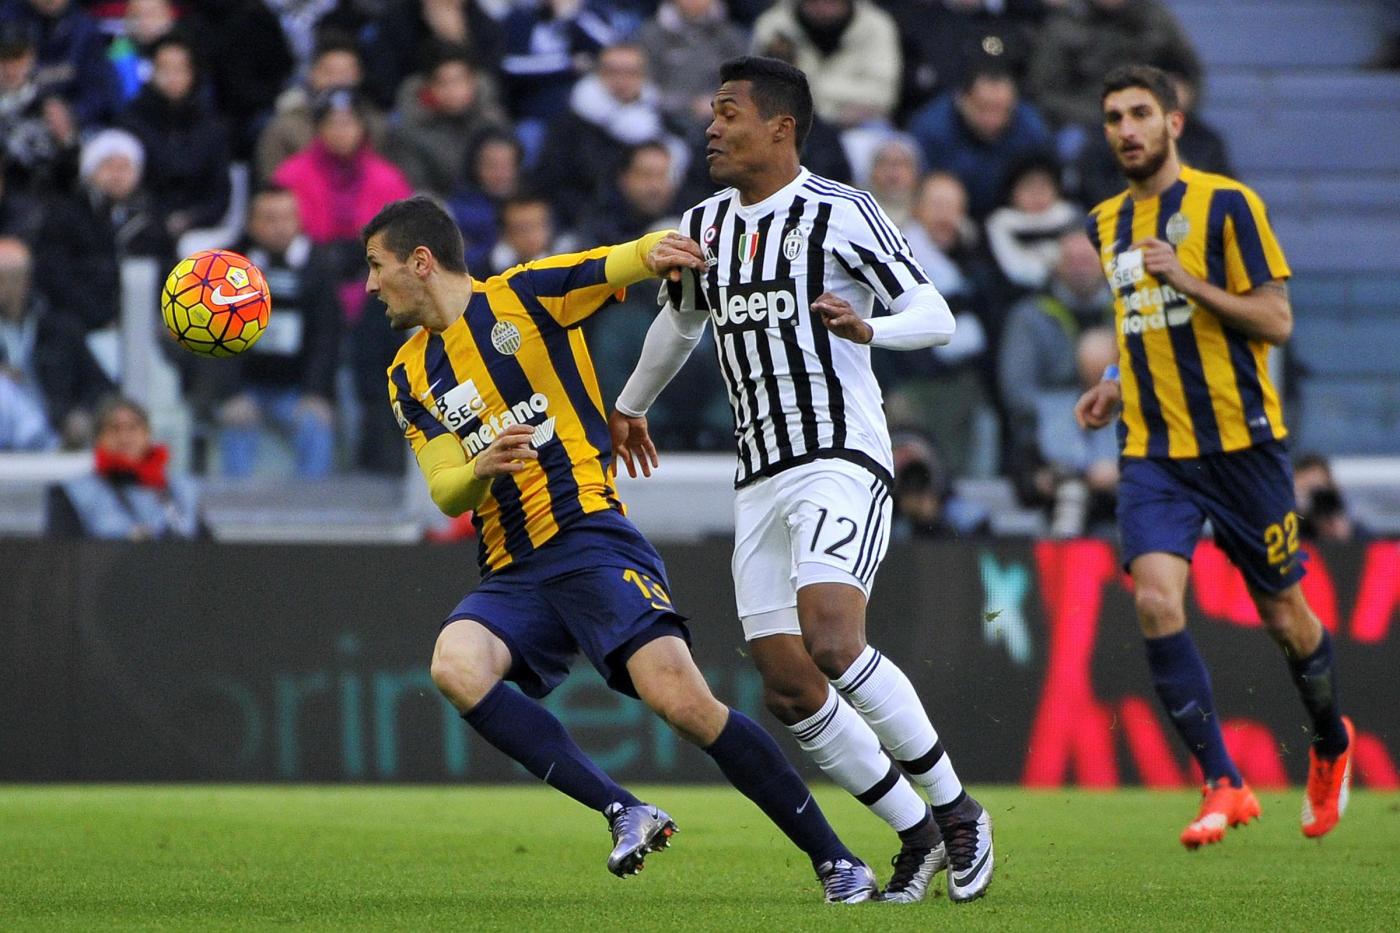 Juventus-Verona 3-0: le pagelle di CalcioWeb